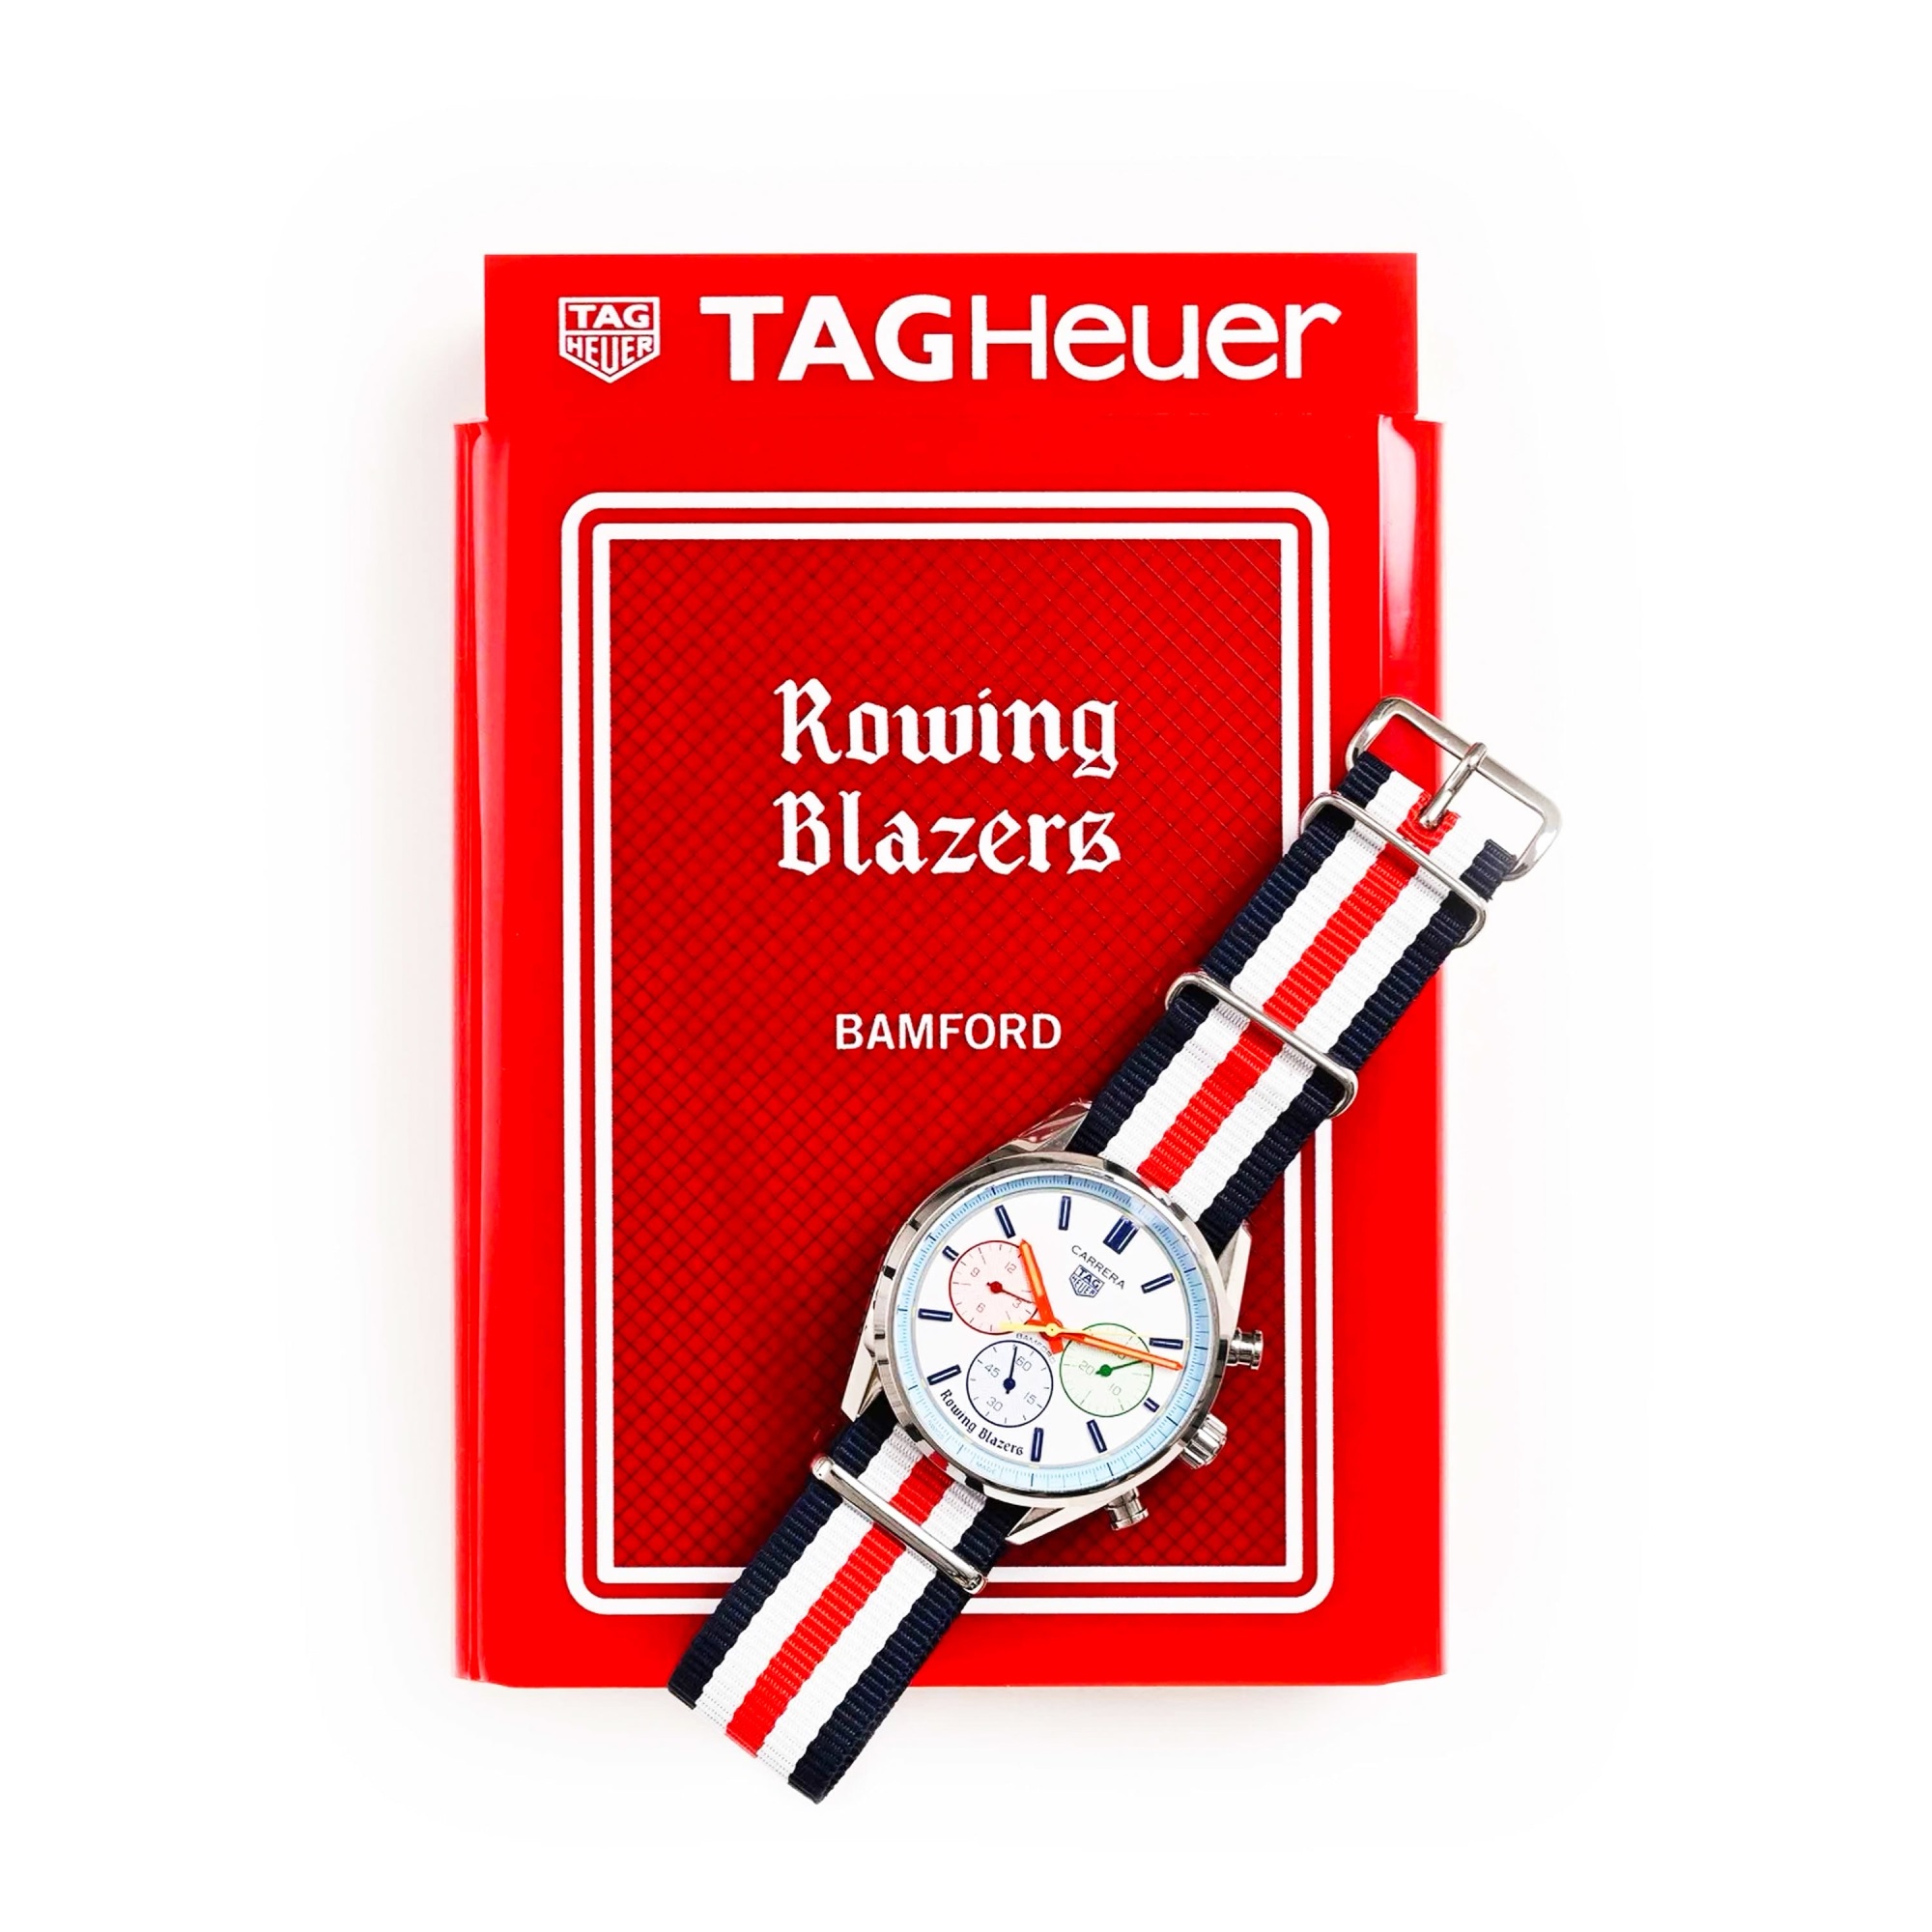 Bamford launches RUF Porsche TAG Heuer Carrera watch - Magneto